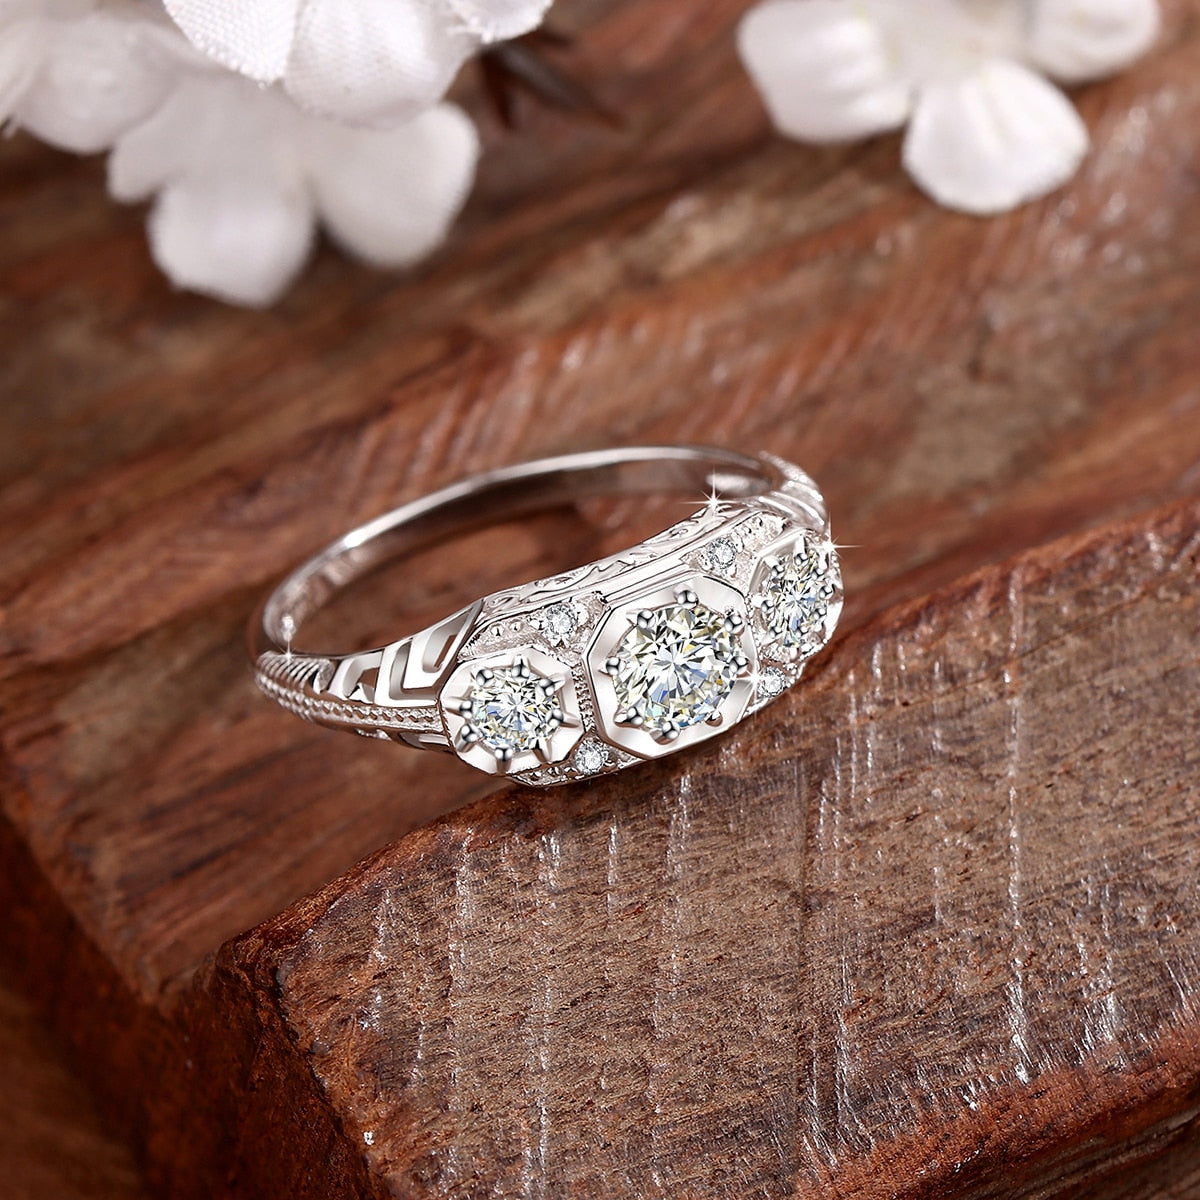 A silver Edwardian style vintage filigree 3 stone ring.